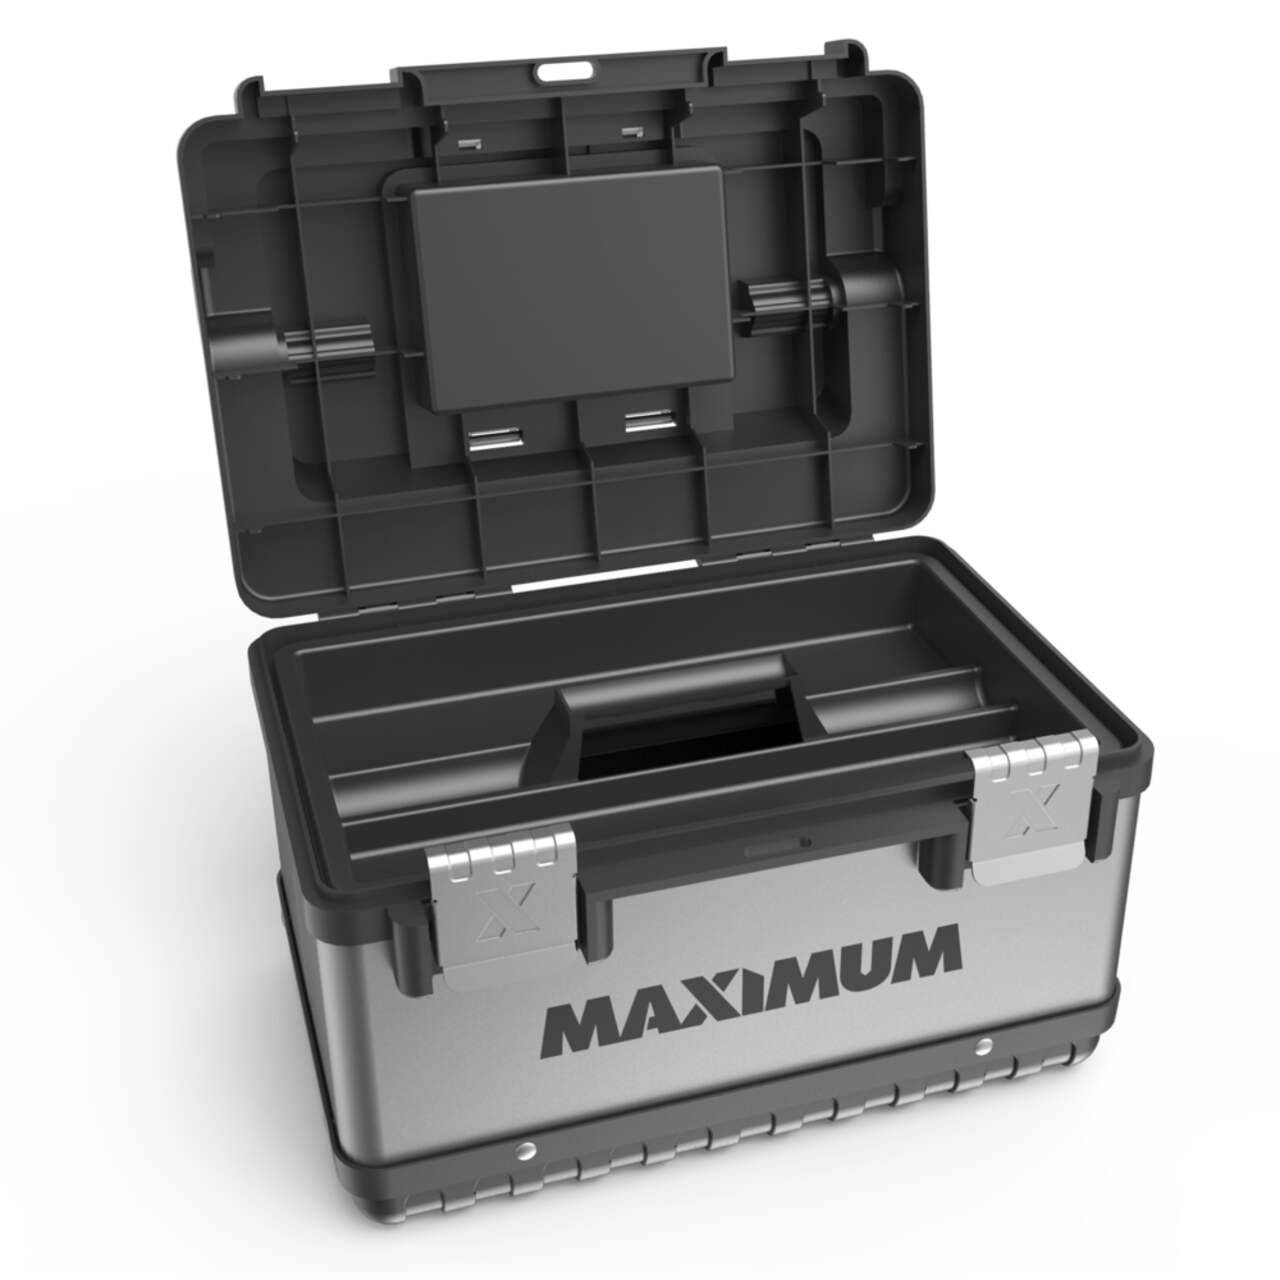 MAXIMUM Shallow 12-Bin Stackable Pro Parts Organizer Tray w/ Lid